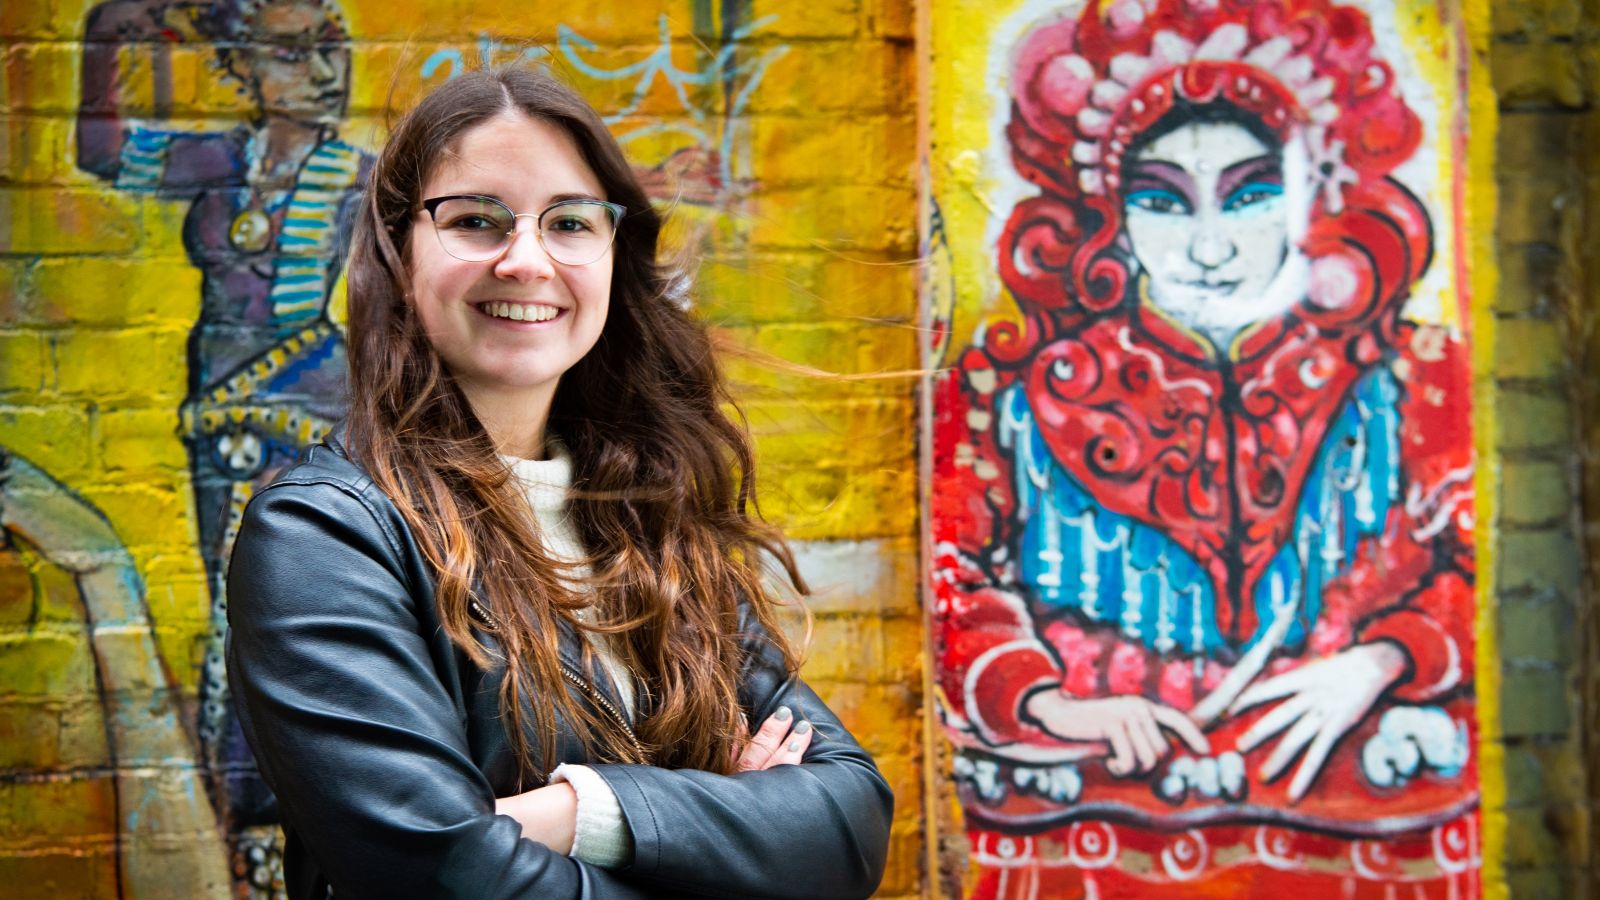 Mariana Restrepo Sierra in front of graffiti